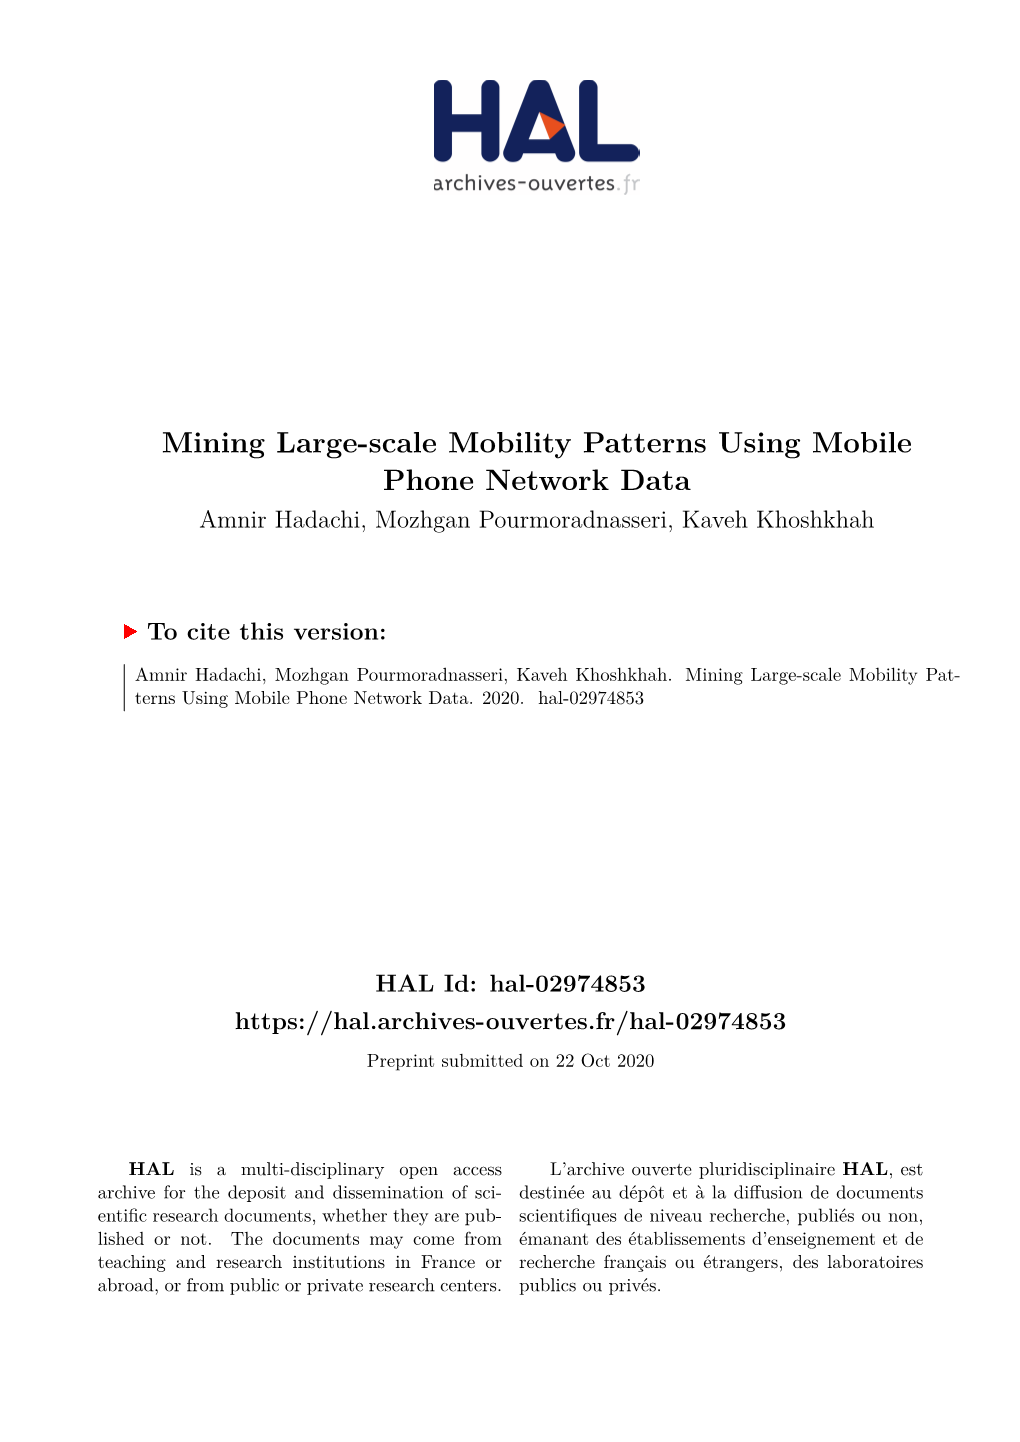 Mining Large-Scale Mobility Patterns Using Mobile Phone Network Data Amnir Hadachi, Mozhgan Pourmoradnasseri, Kaveh Khoshkhah